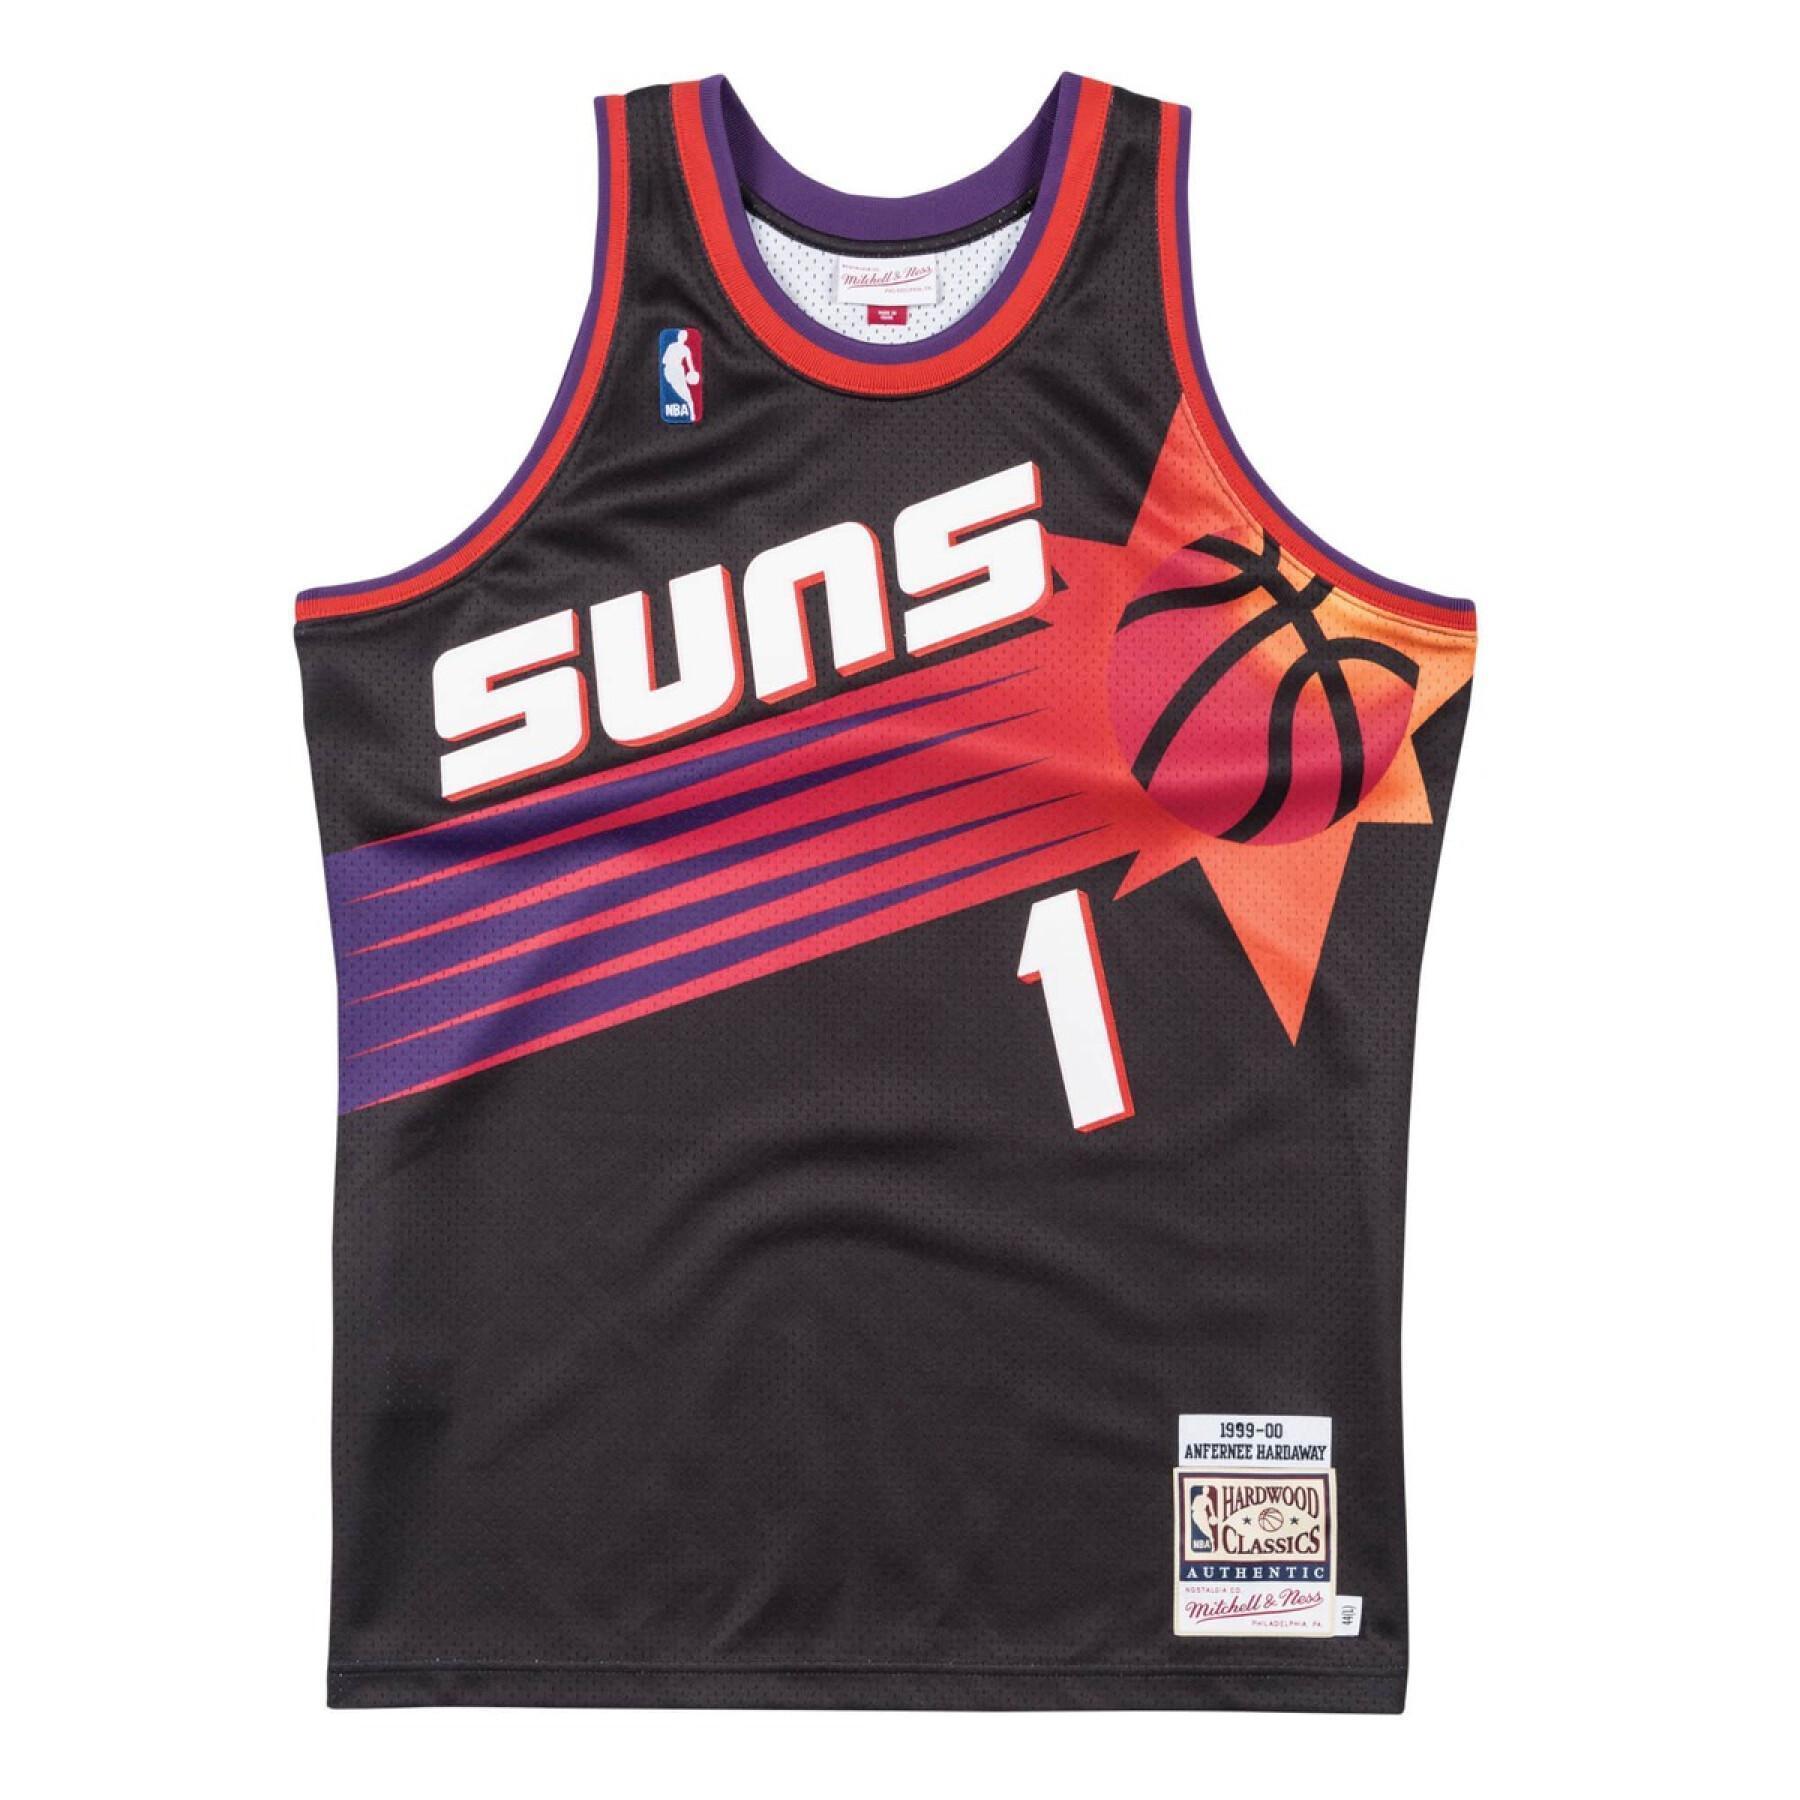 Autentyczna koszulka Phoenix Suns nba Anfernee Hardaway 1999/00